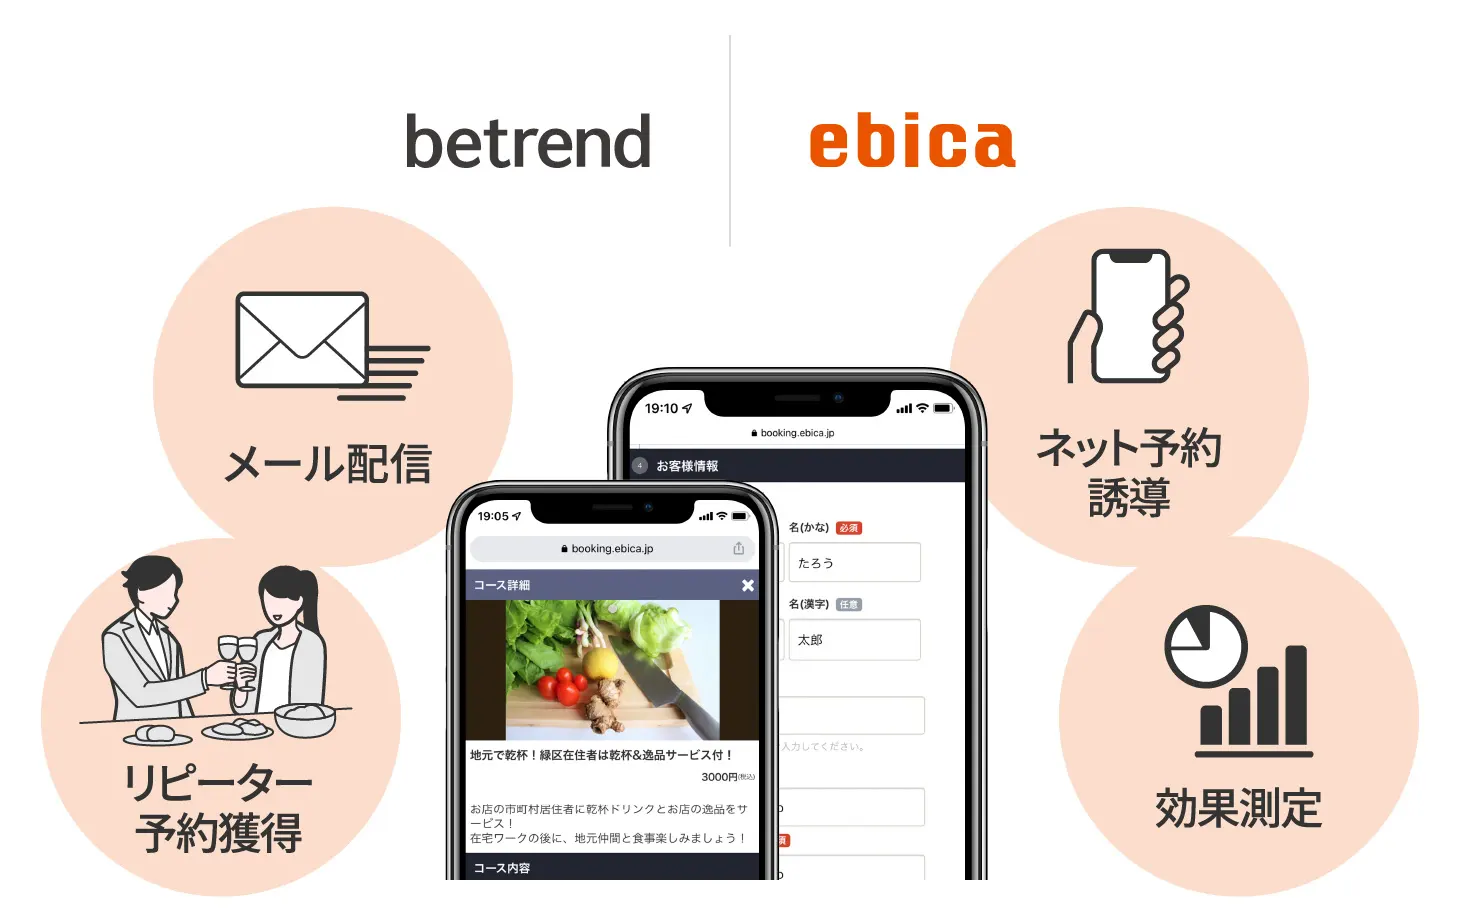 「betrend」×「ebica」連携でお客様にメールで簡単アプローチ